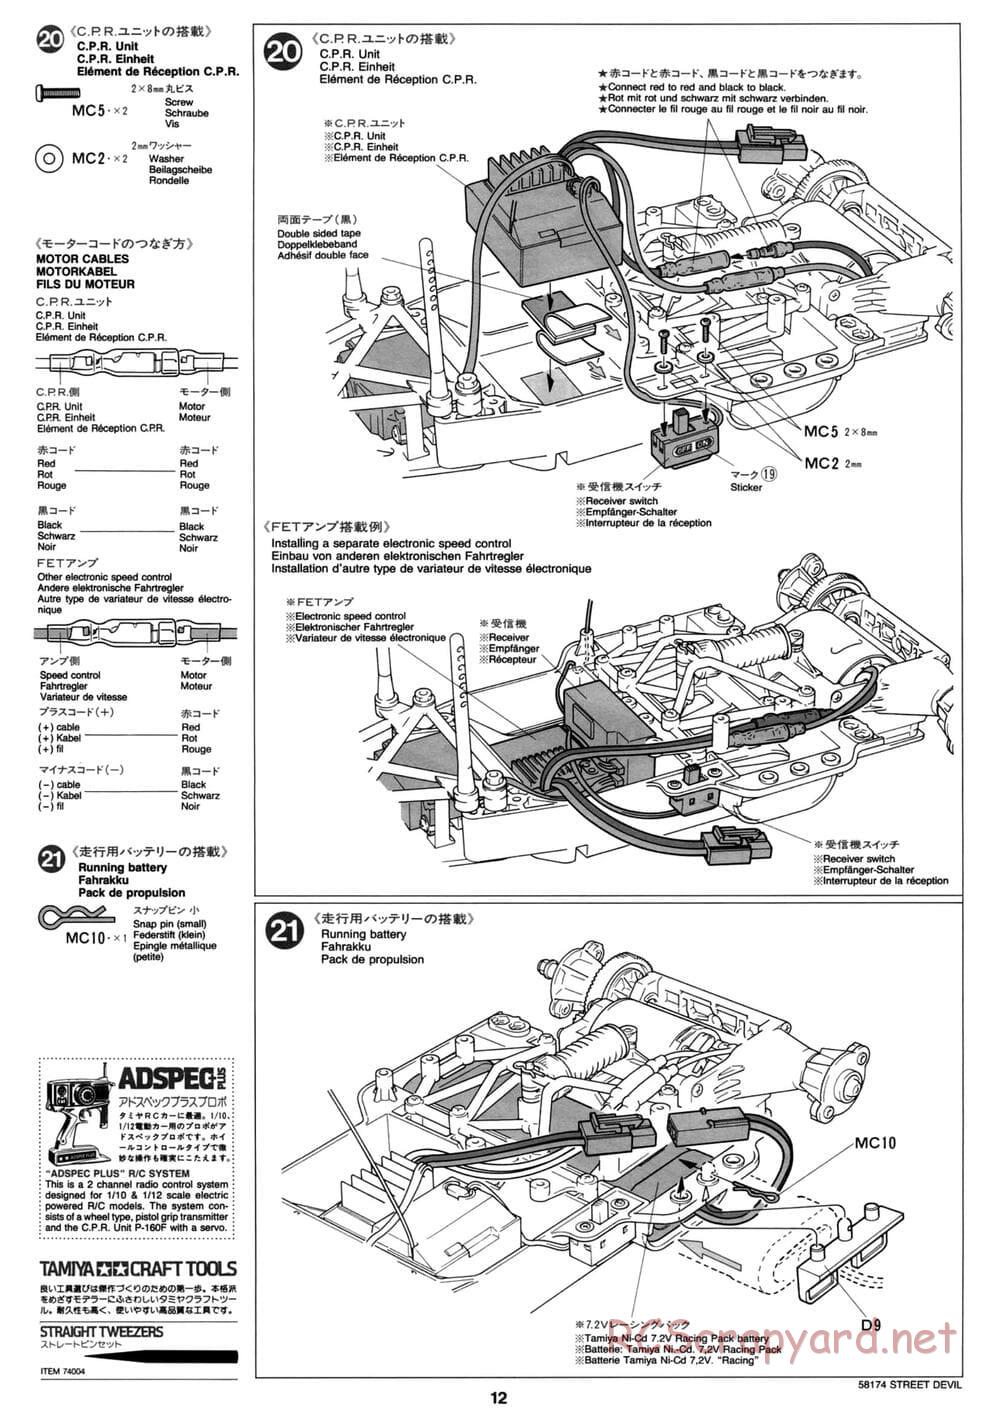 Tamiya - Street Devil - Group-C Chassis - Manual - Page 12